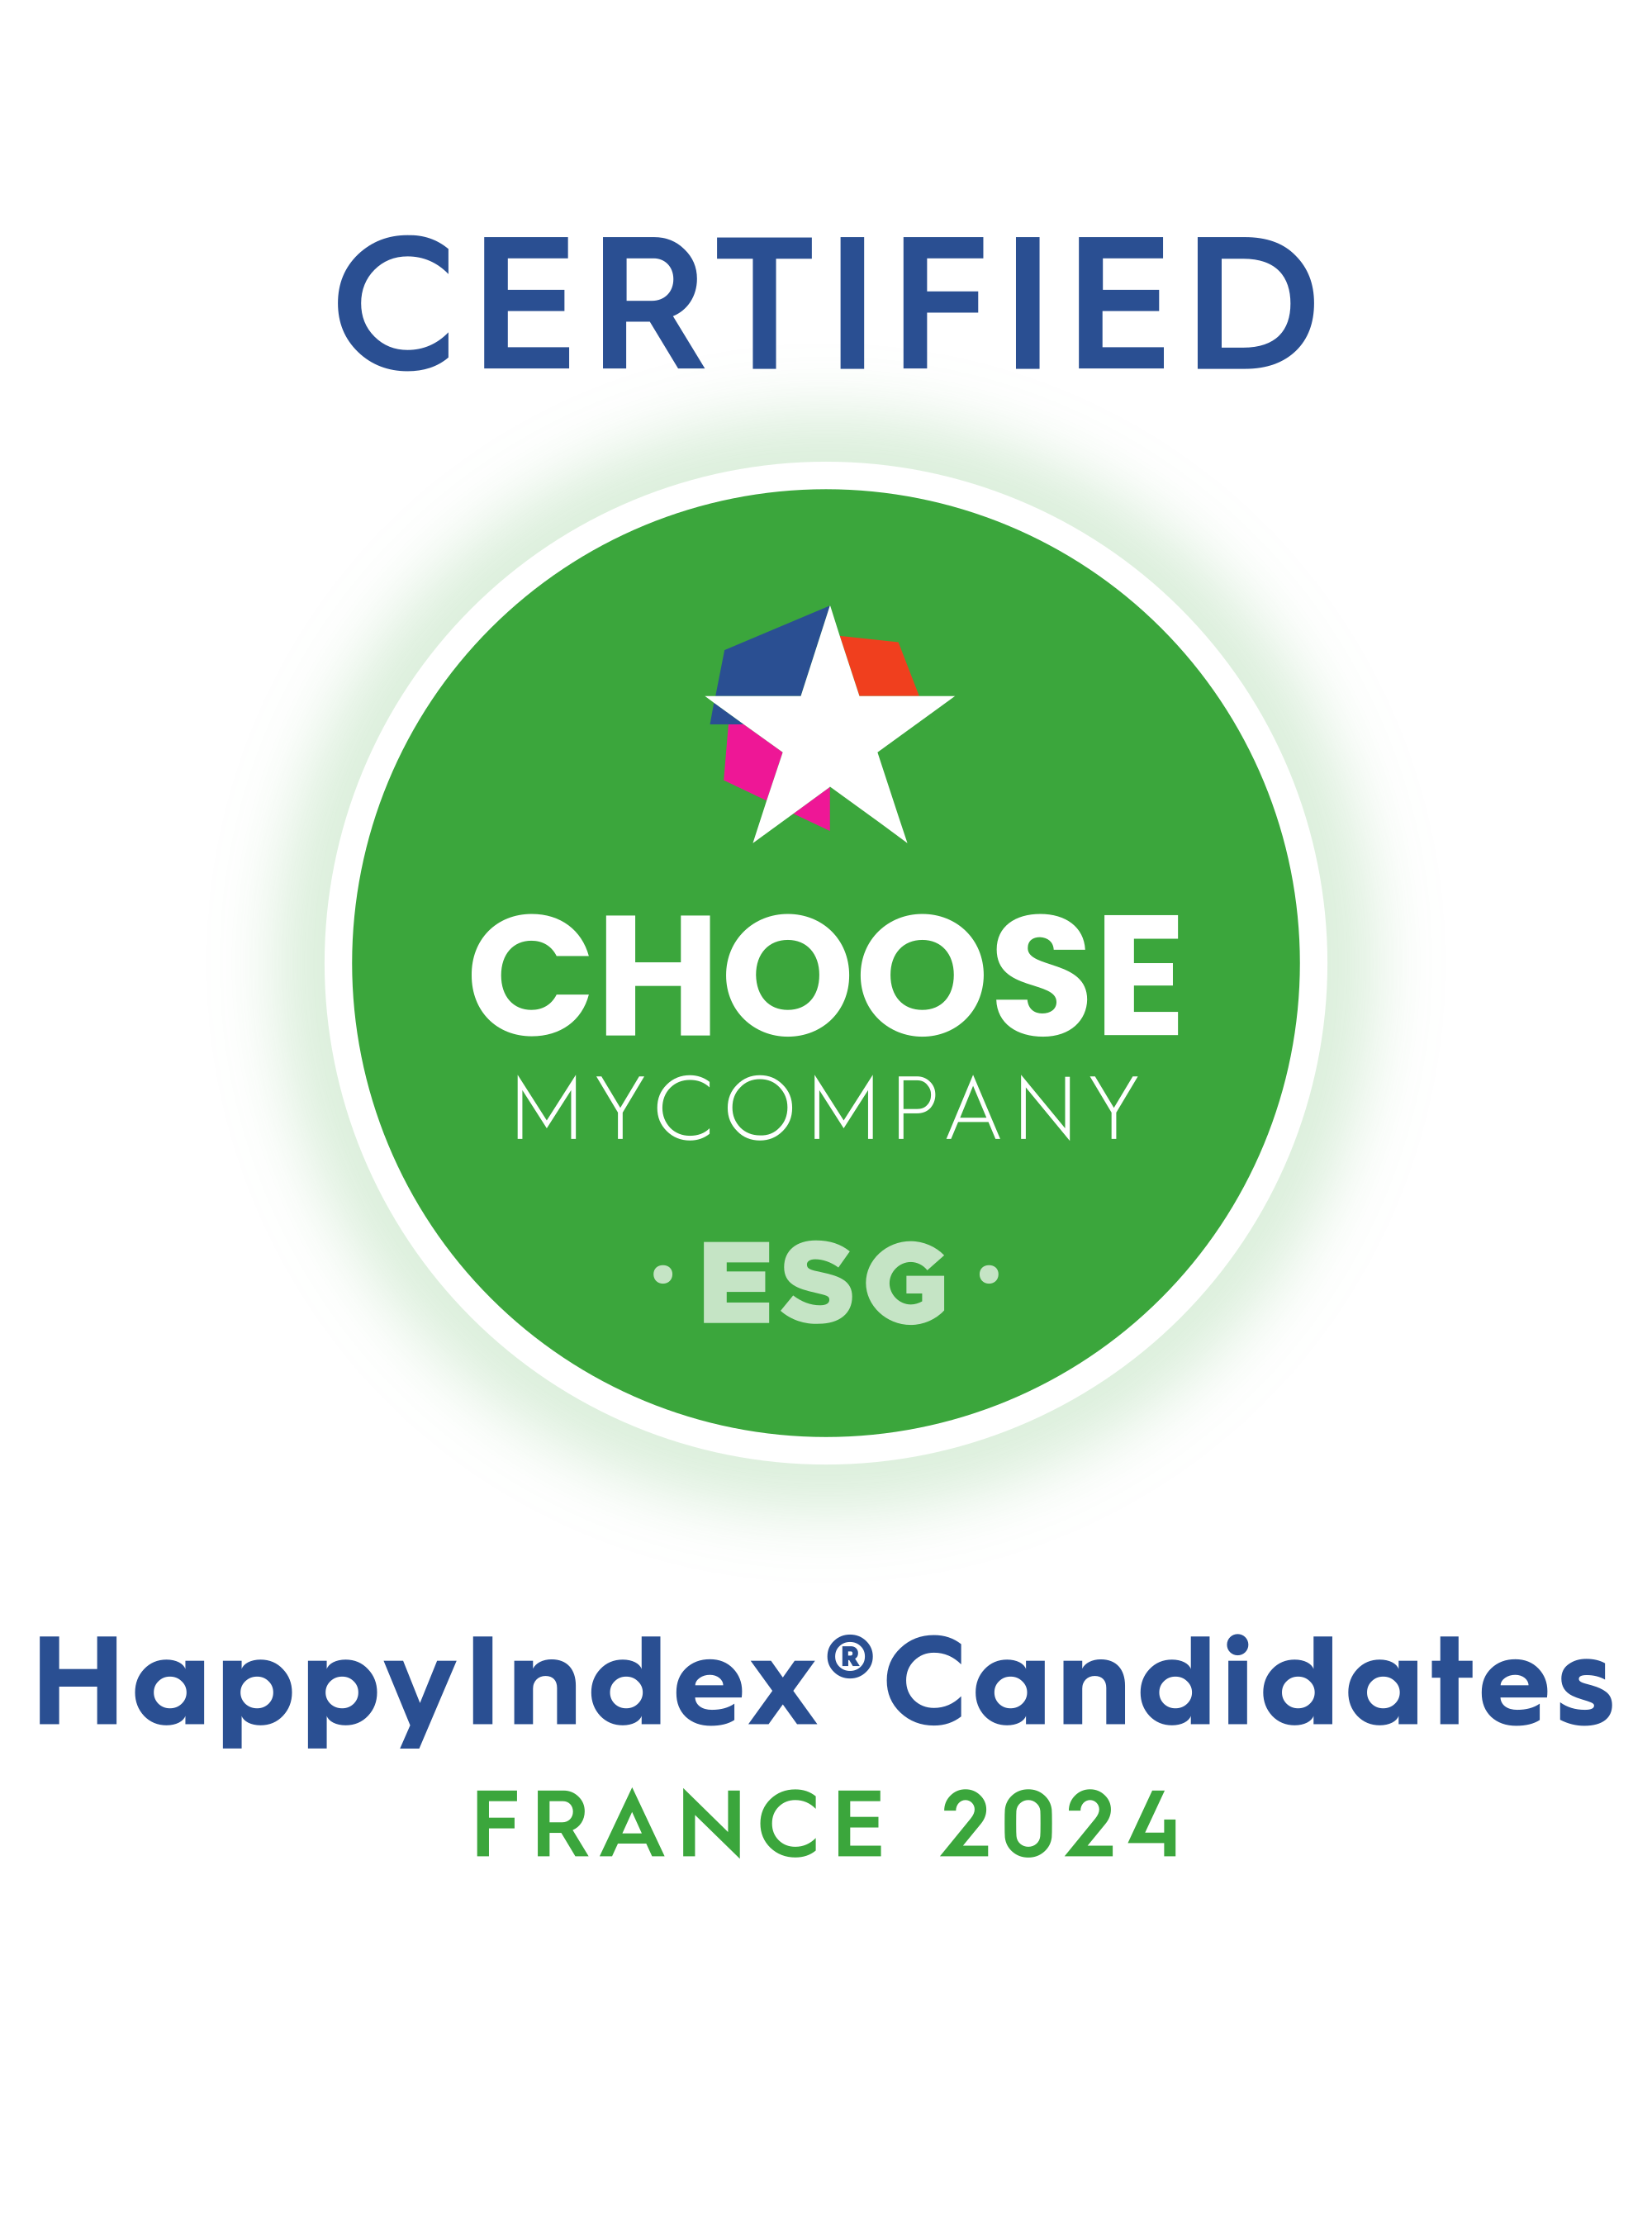 MAIF certifiée HappyIndex Candidates